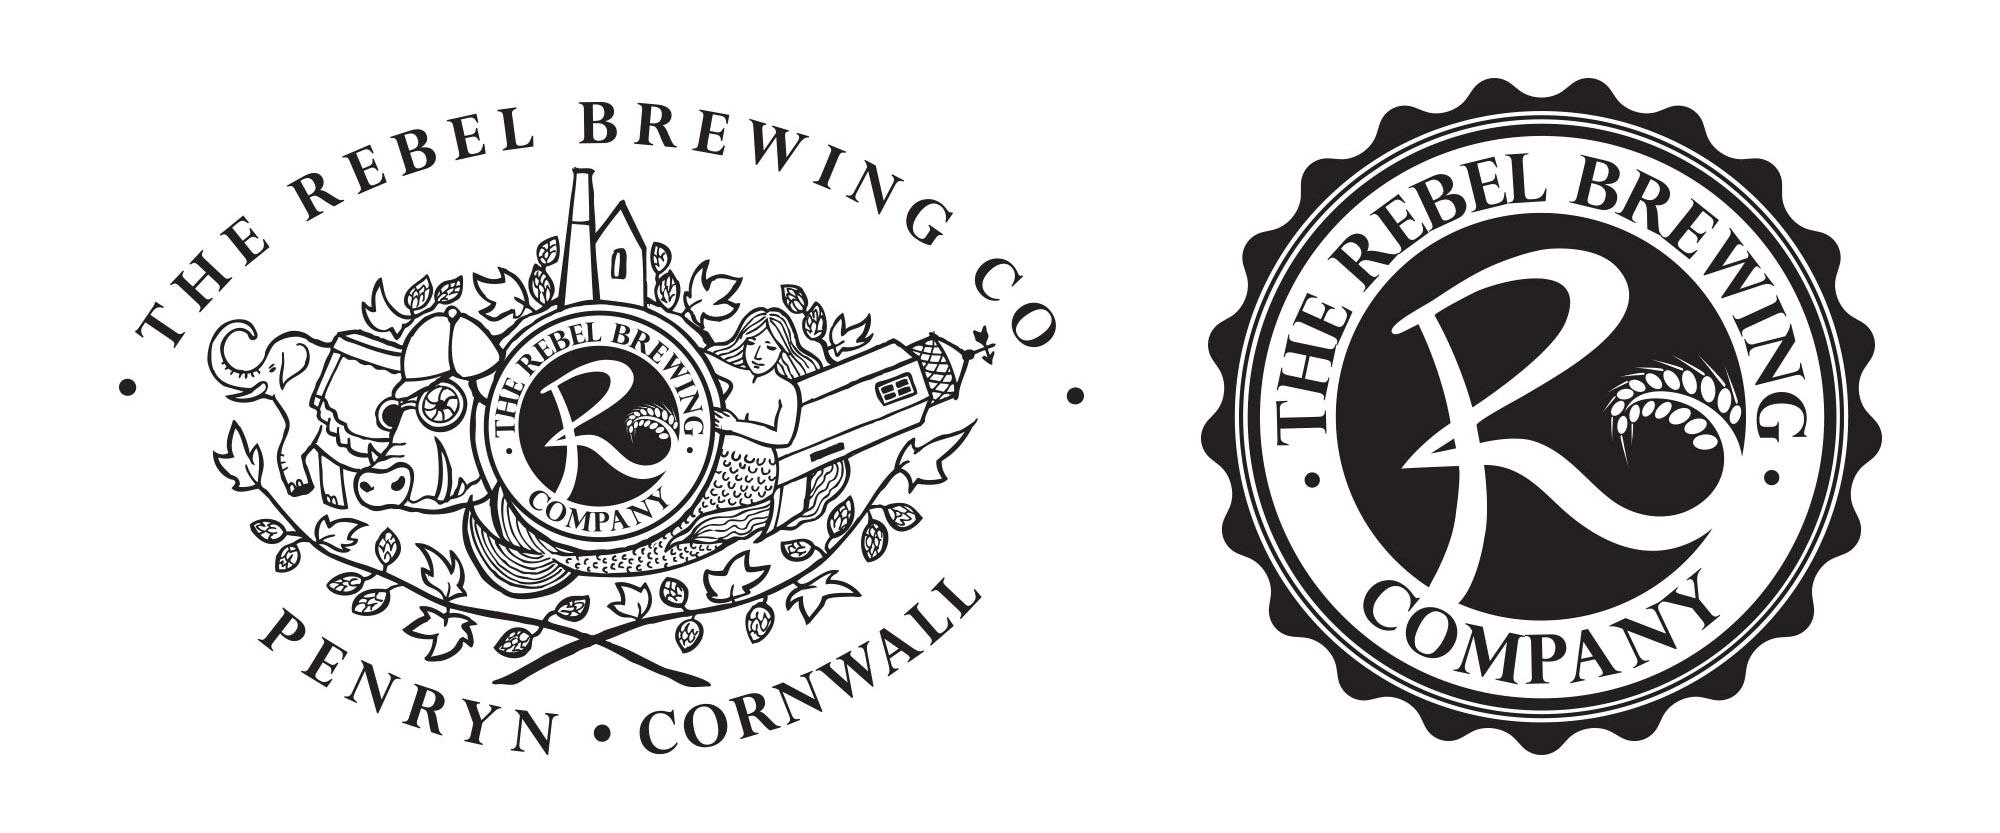 Craft Beer Logo - The Rebel Brewing Co. Craft beer labels, branding